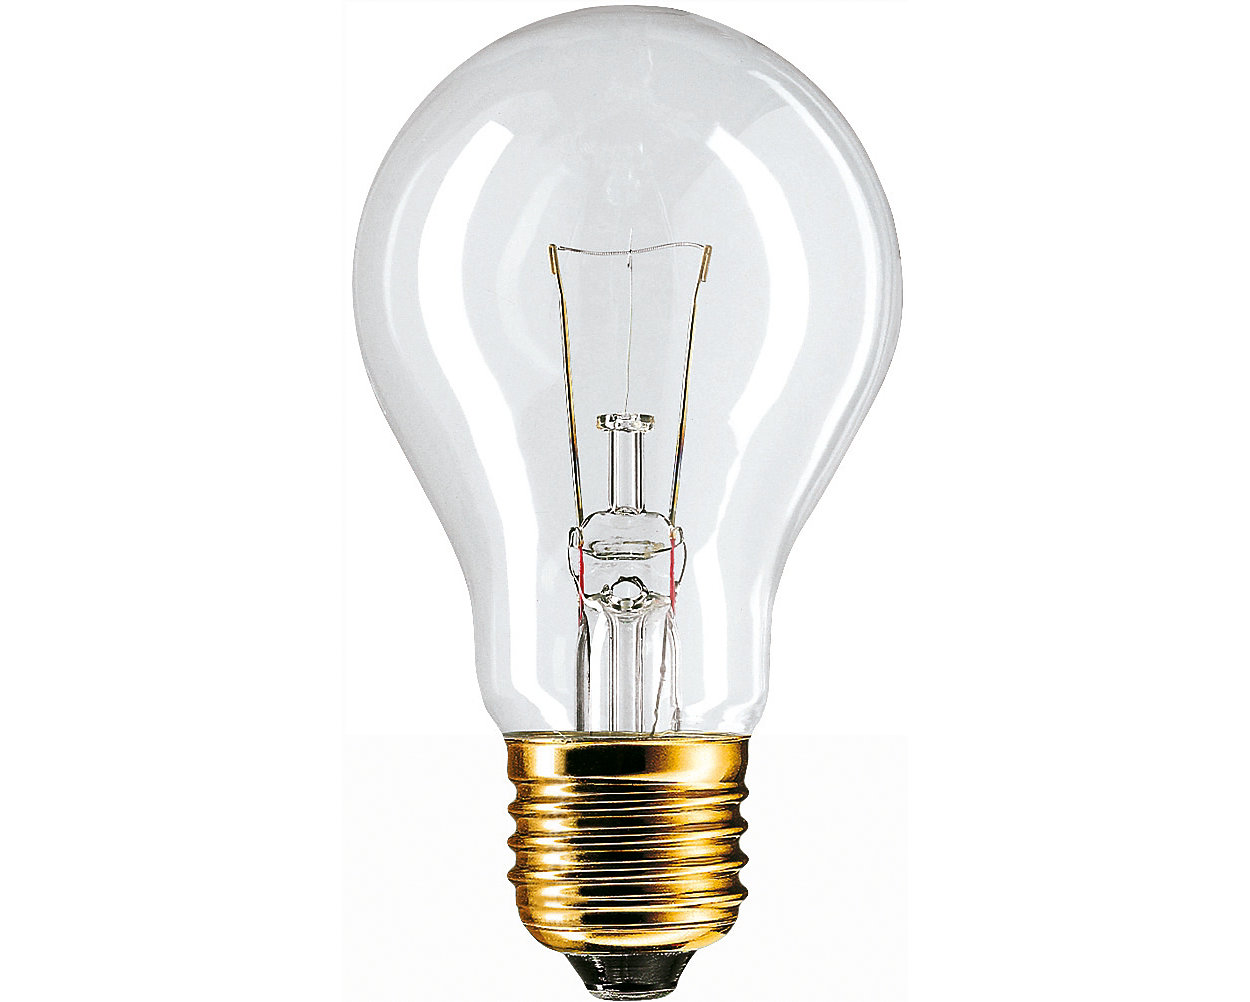 1 x New CLEAR 250W E27 ES ML500 Heat Lamp Light Bulb Lamp 230V Job Lot UK Seller 